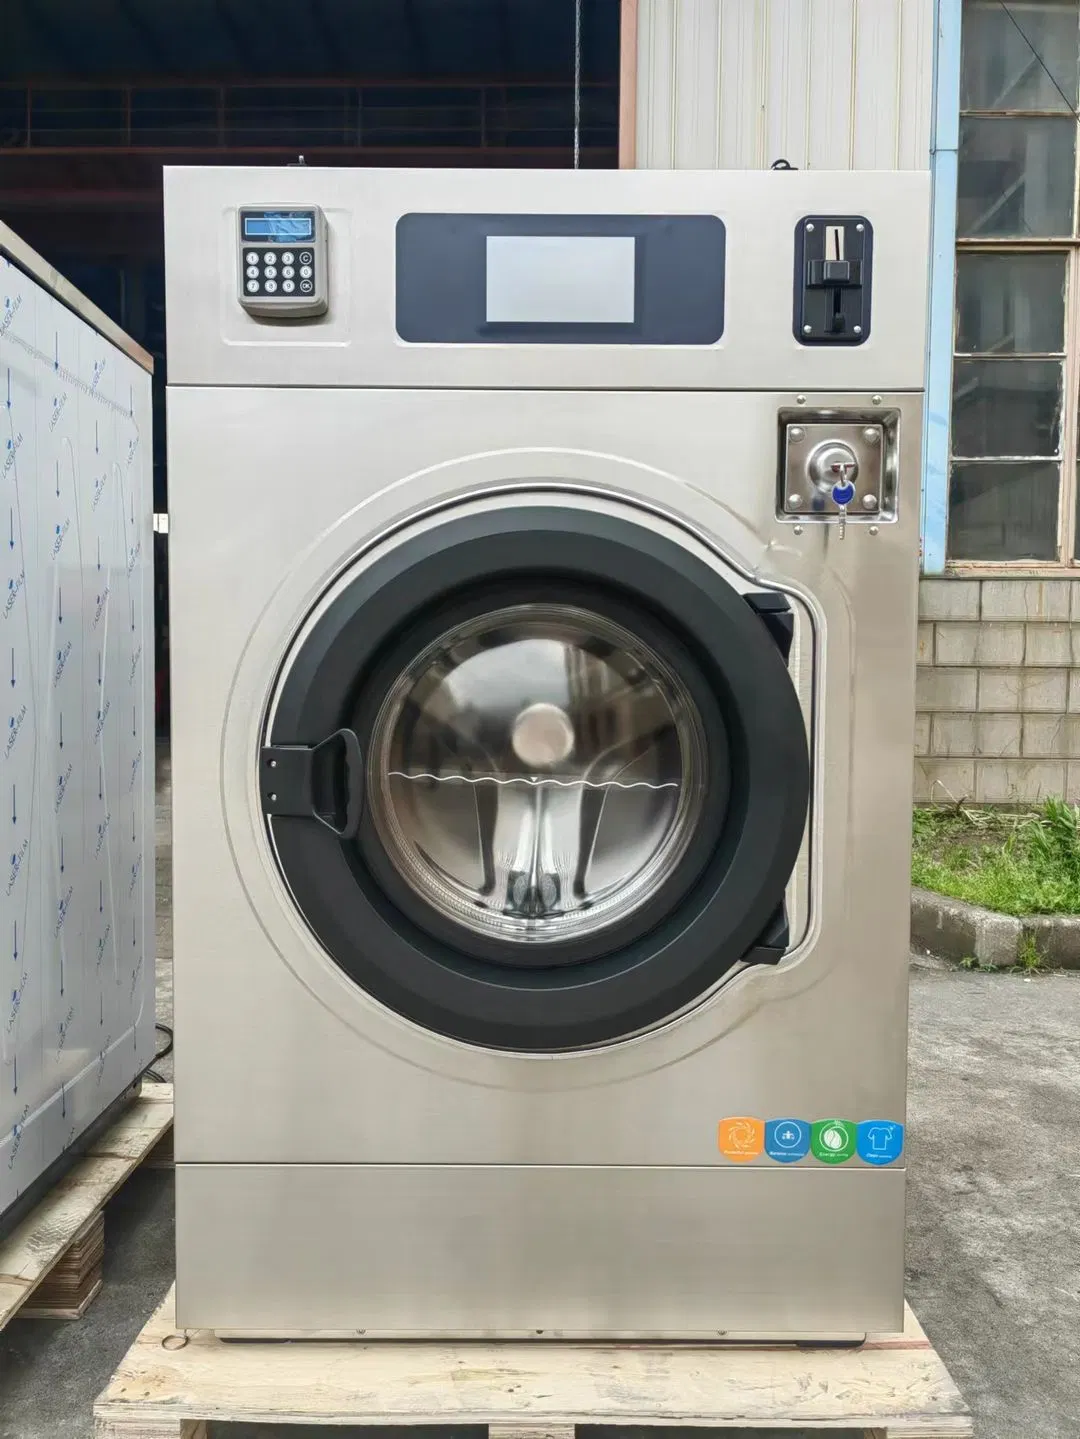 Industrielle Waschmaschinen Waschmaschine Kommerzielle Self-Service Waschmaschinen Münzwaschmaschine Waschmaschinen-Extraktor